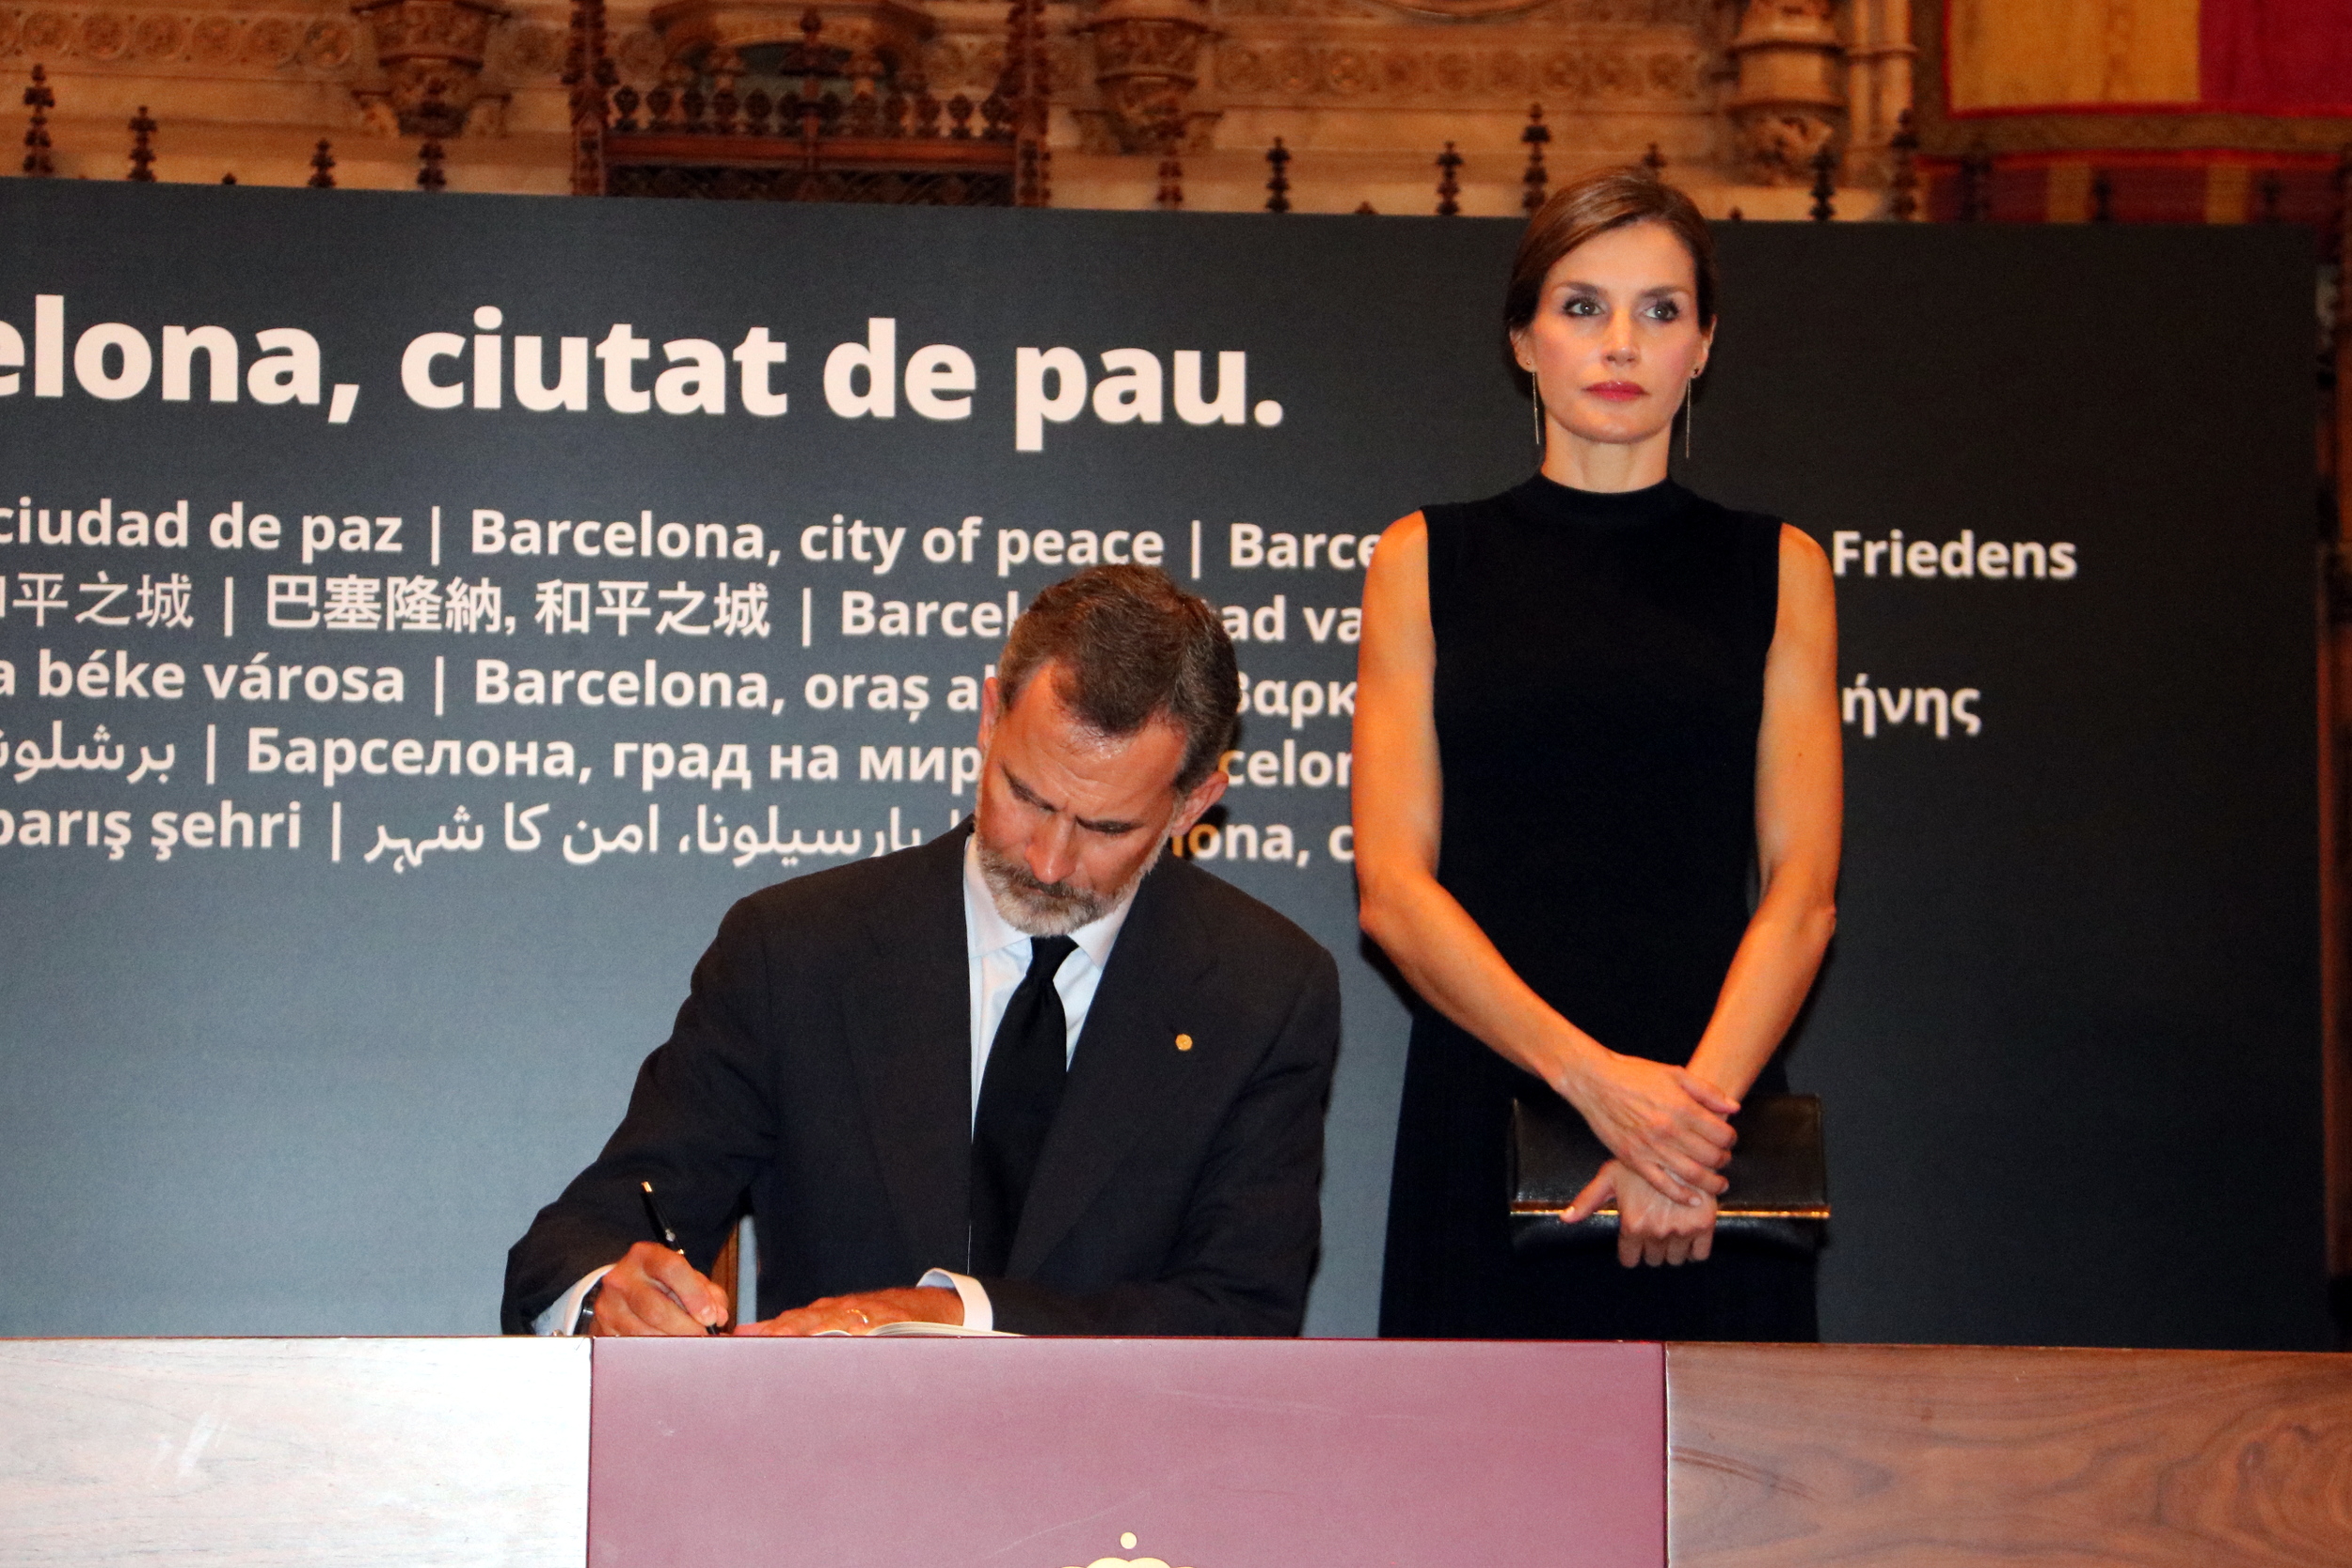 The King of Spain, Felipe VI, signs the condolence book next to the Queen Letizia